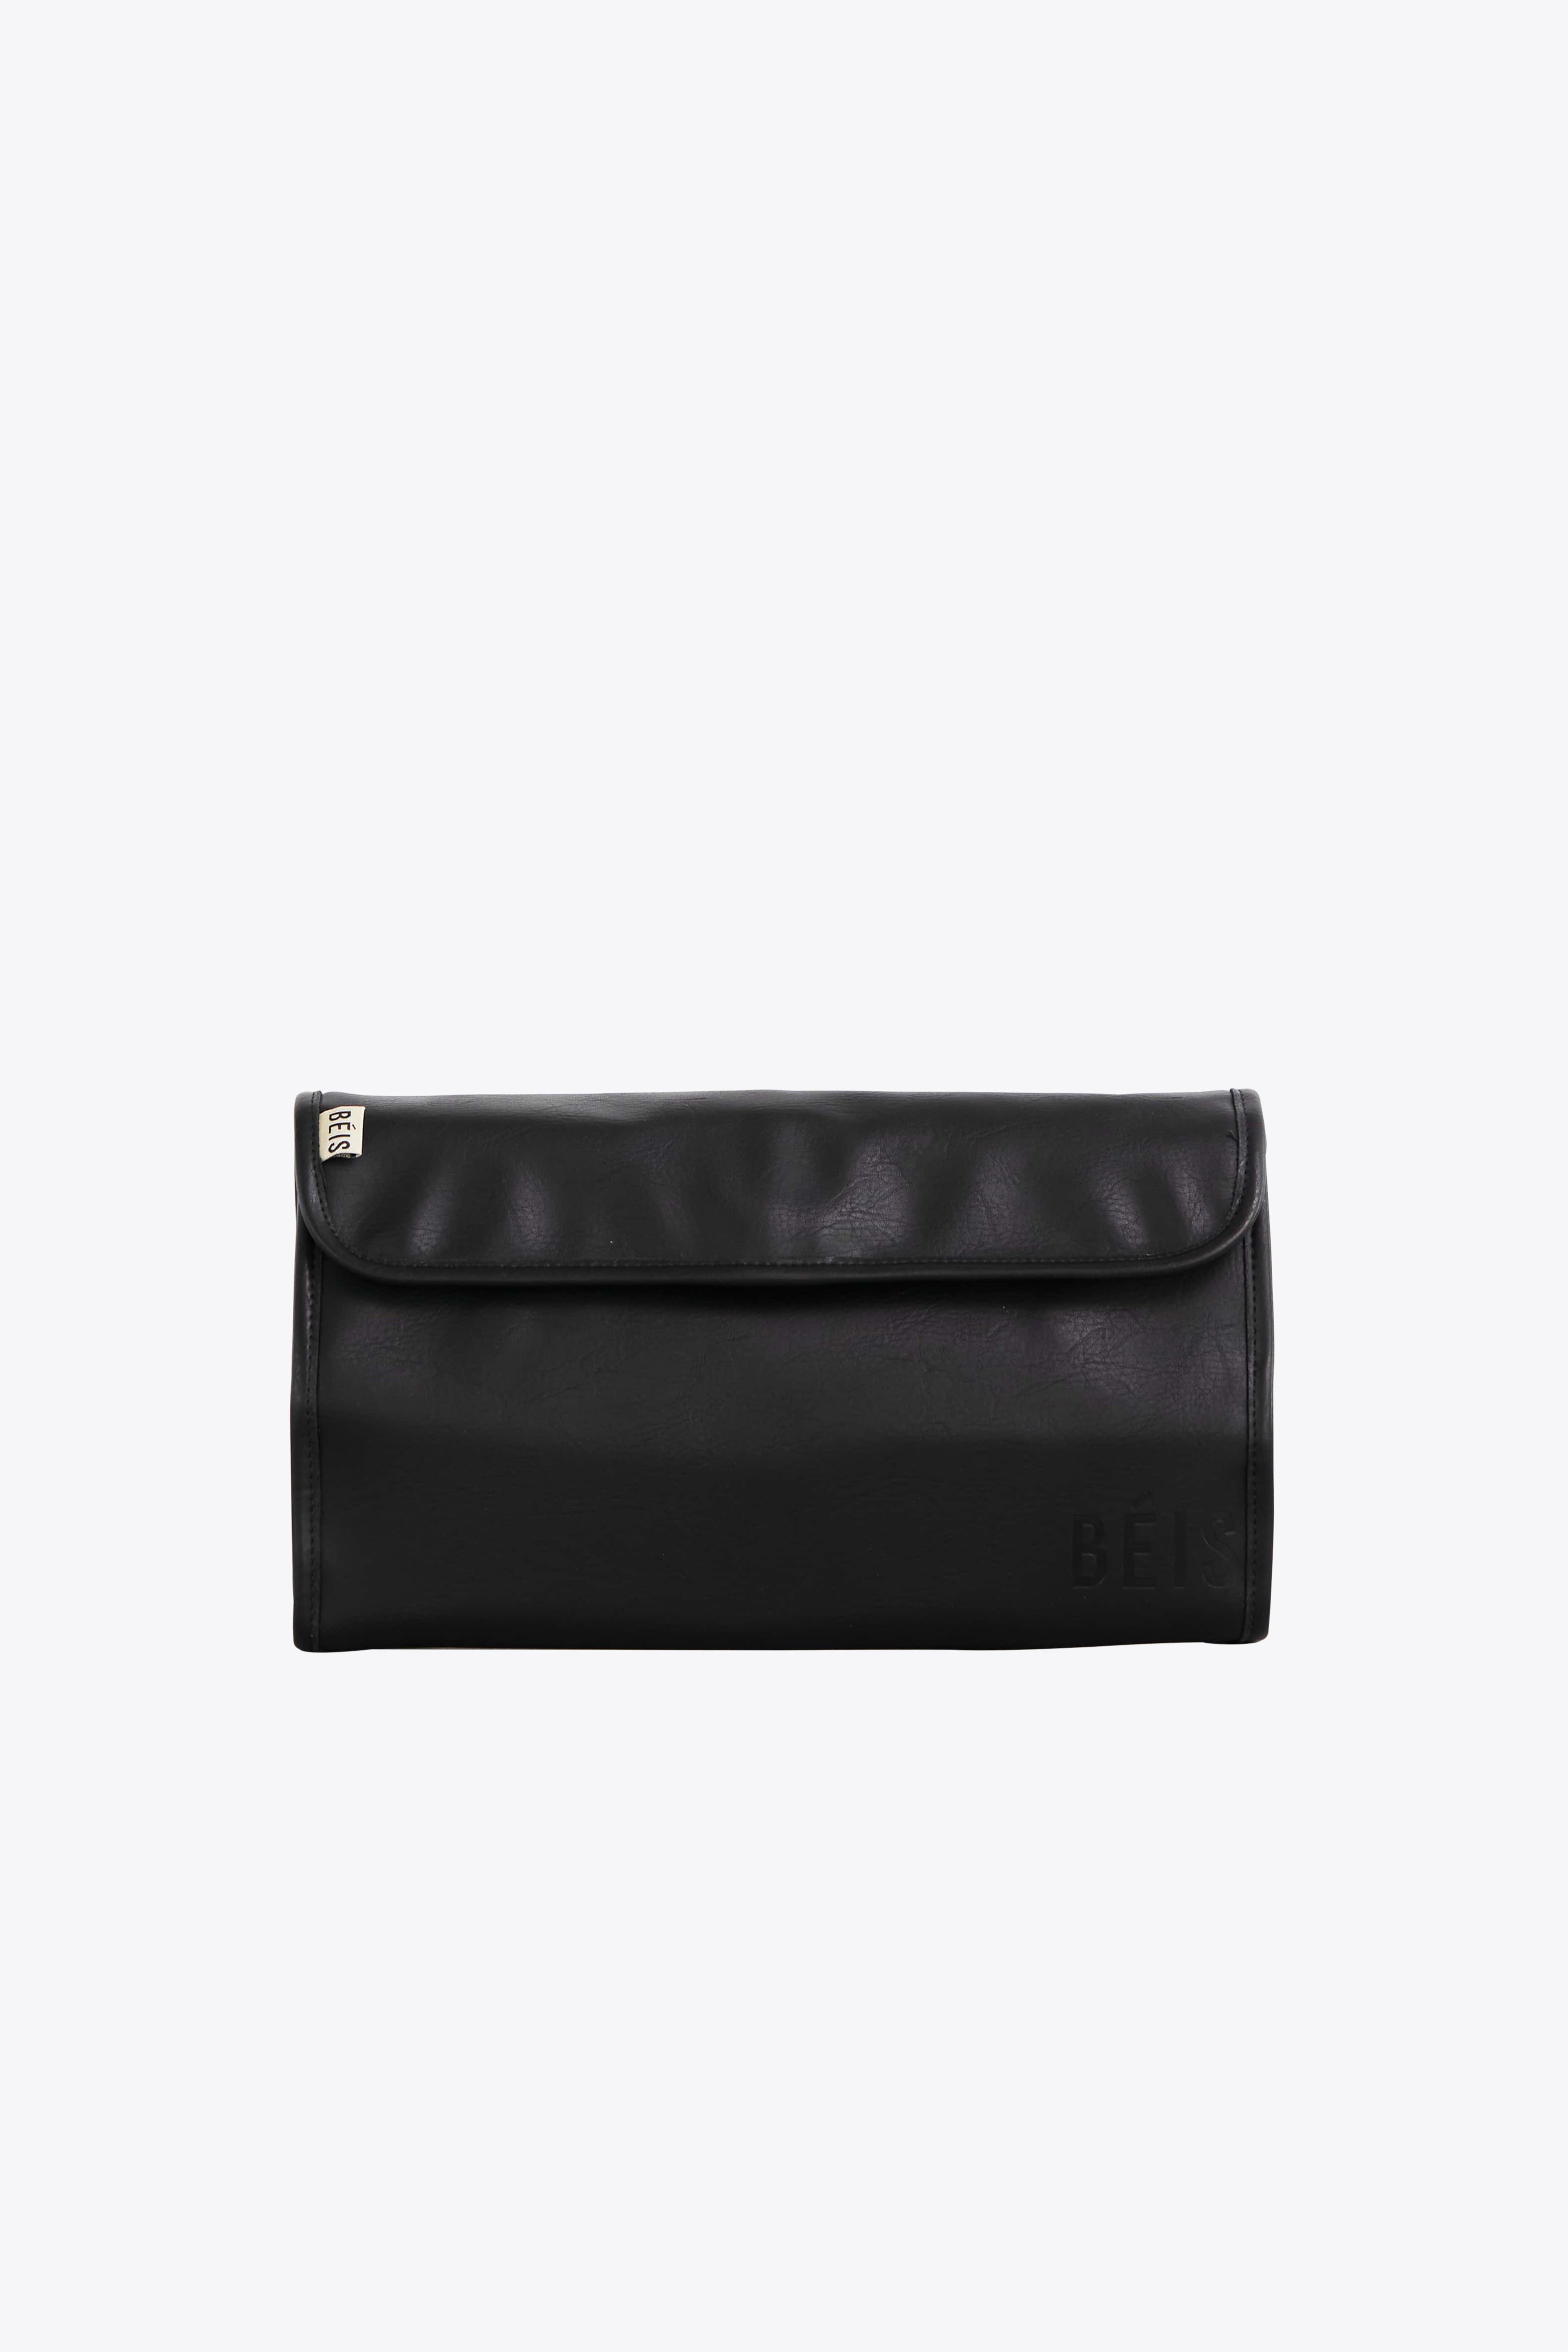 Decor Leather Zip Around Mini Jewelry Box - Black